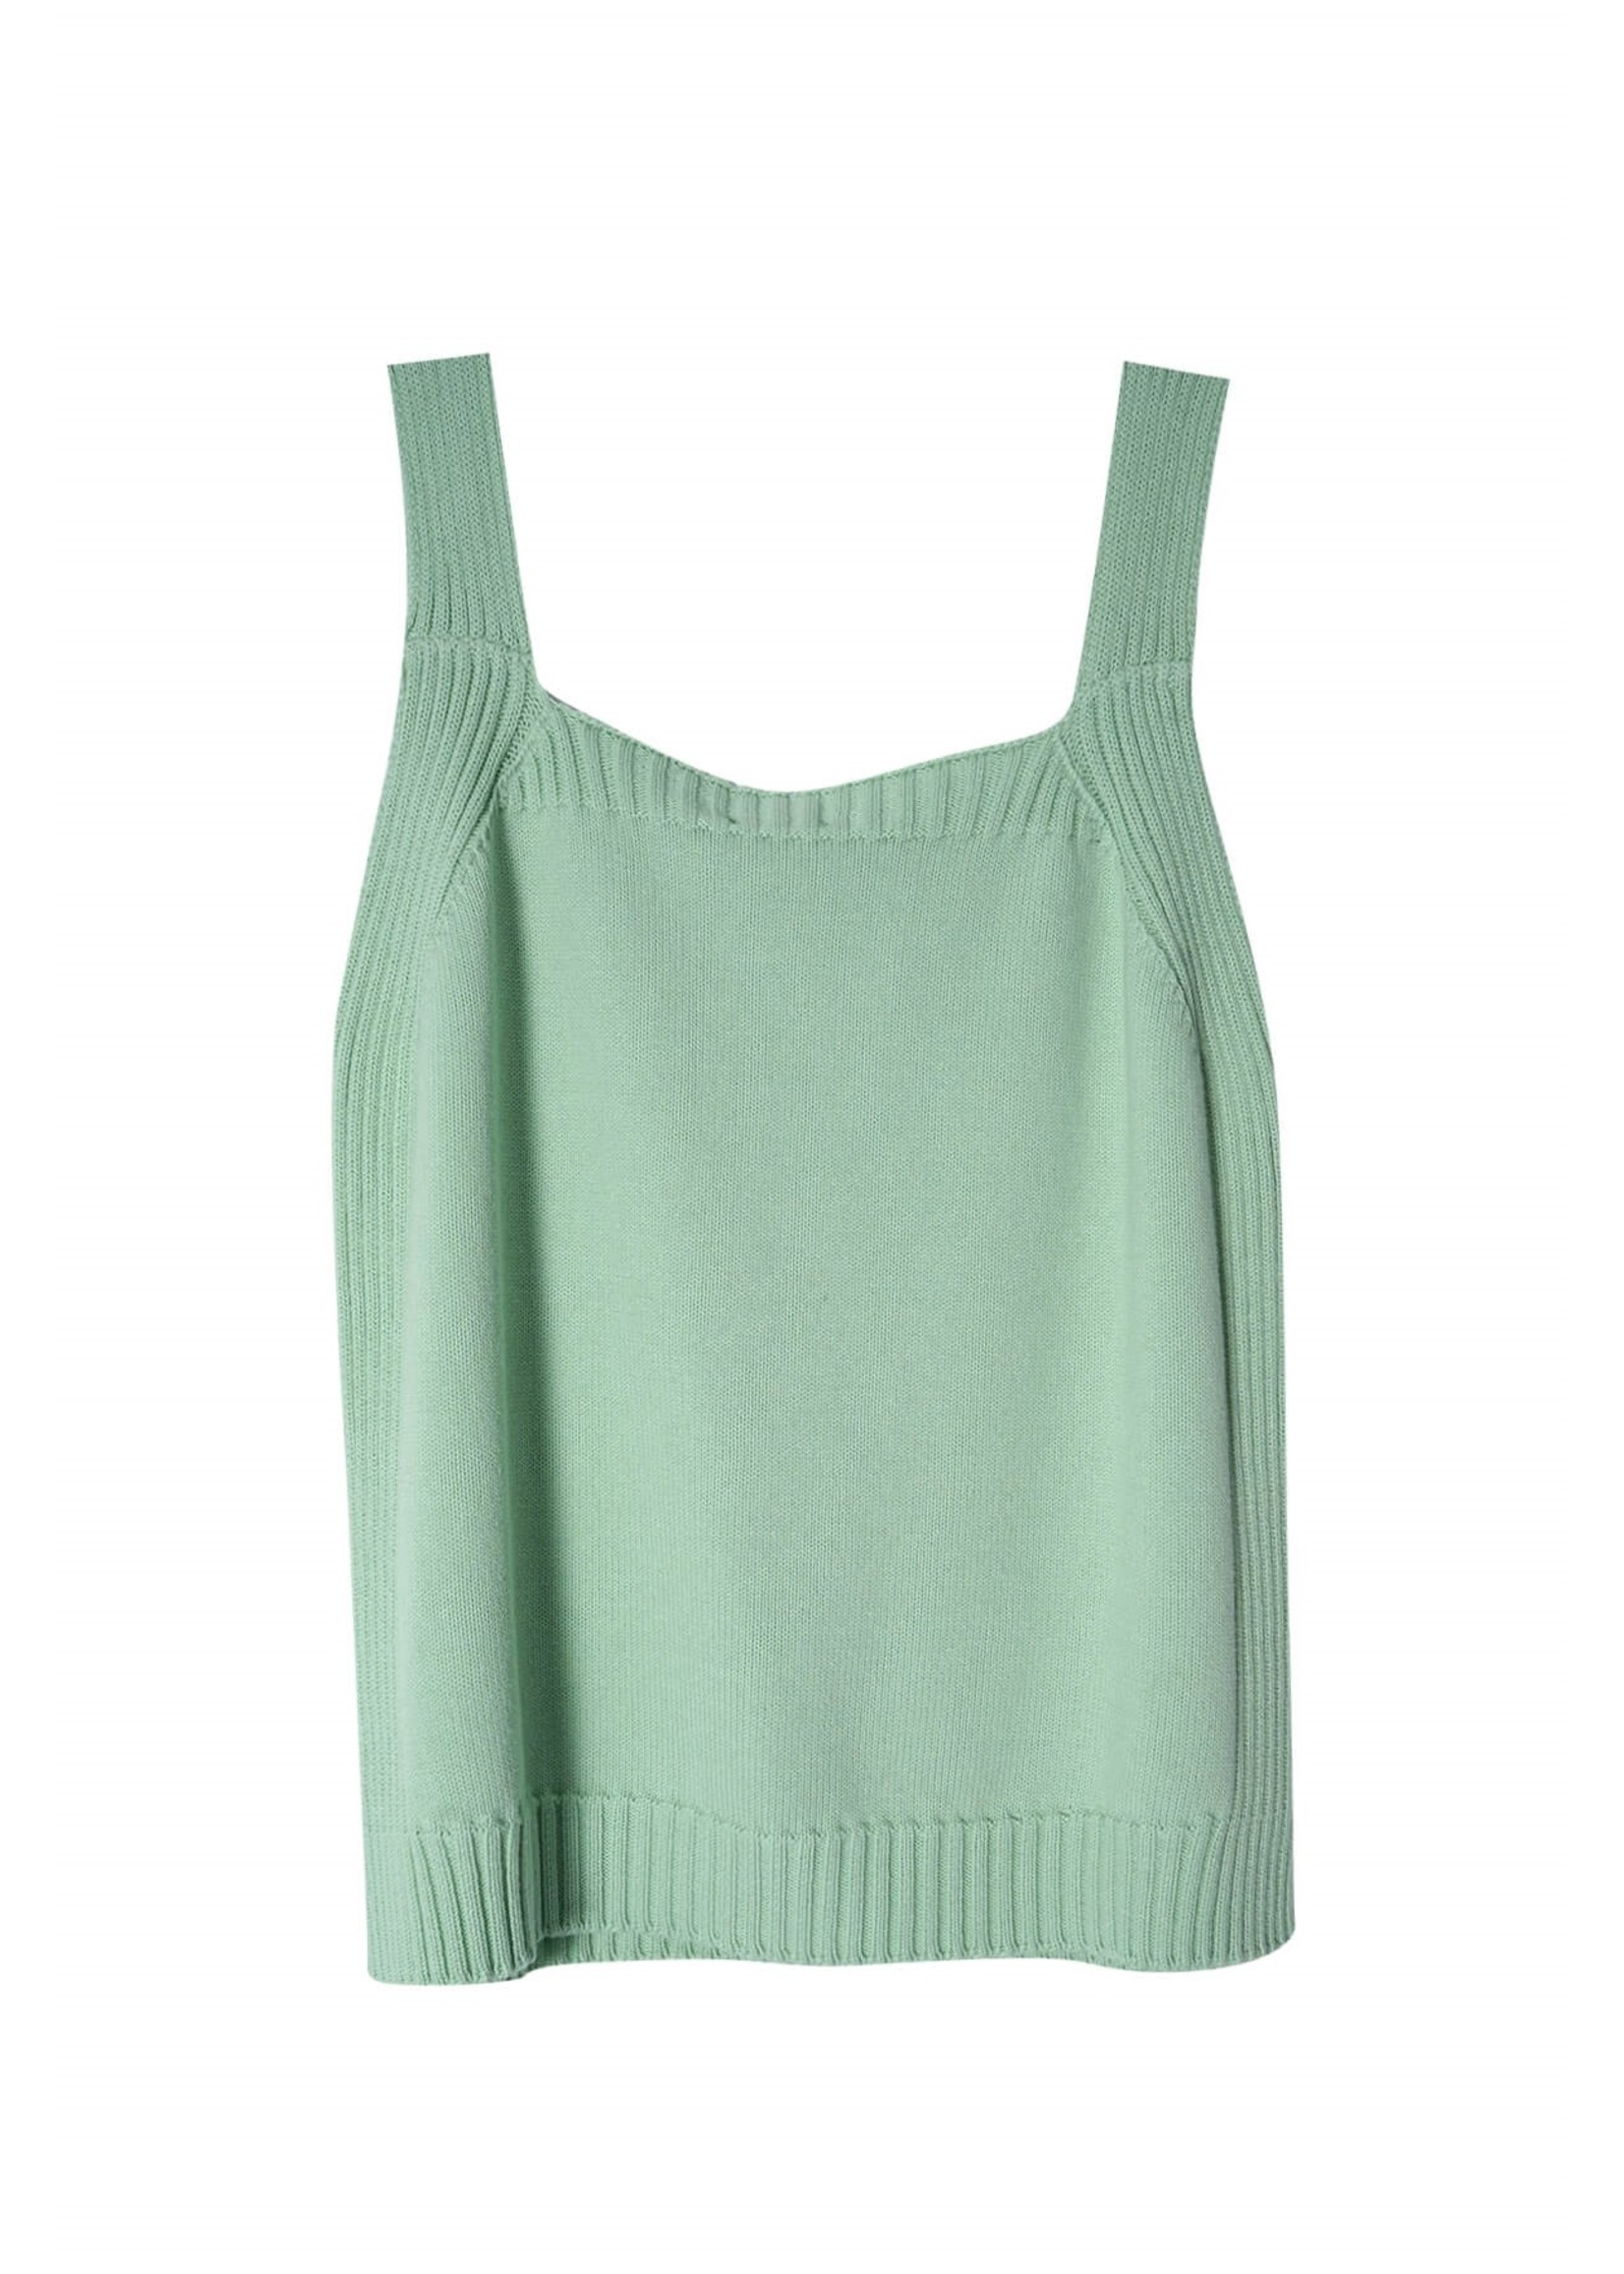 SYBIL b5625 mint green cotton knit top